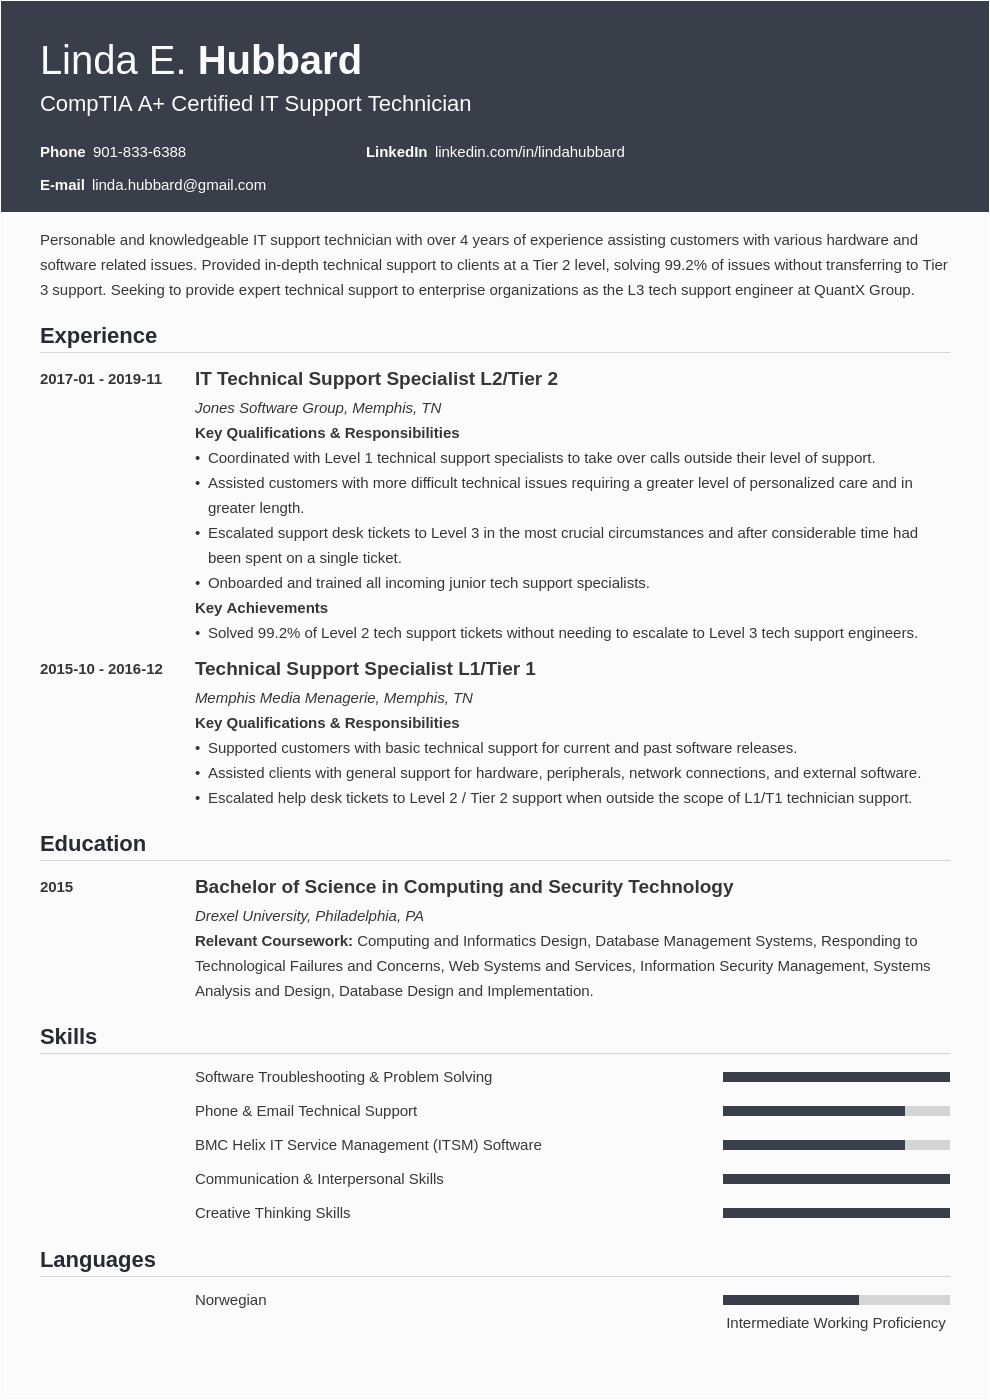 Technical Support Resume Sample for Fresher Technical Support Resume Sample & Job Description [20 Tips]